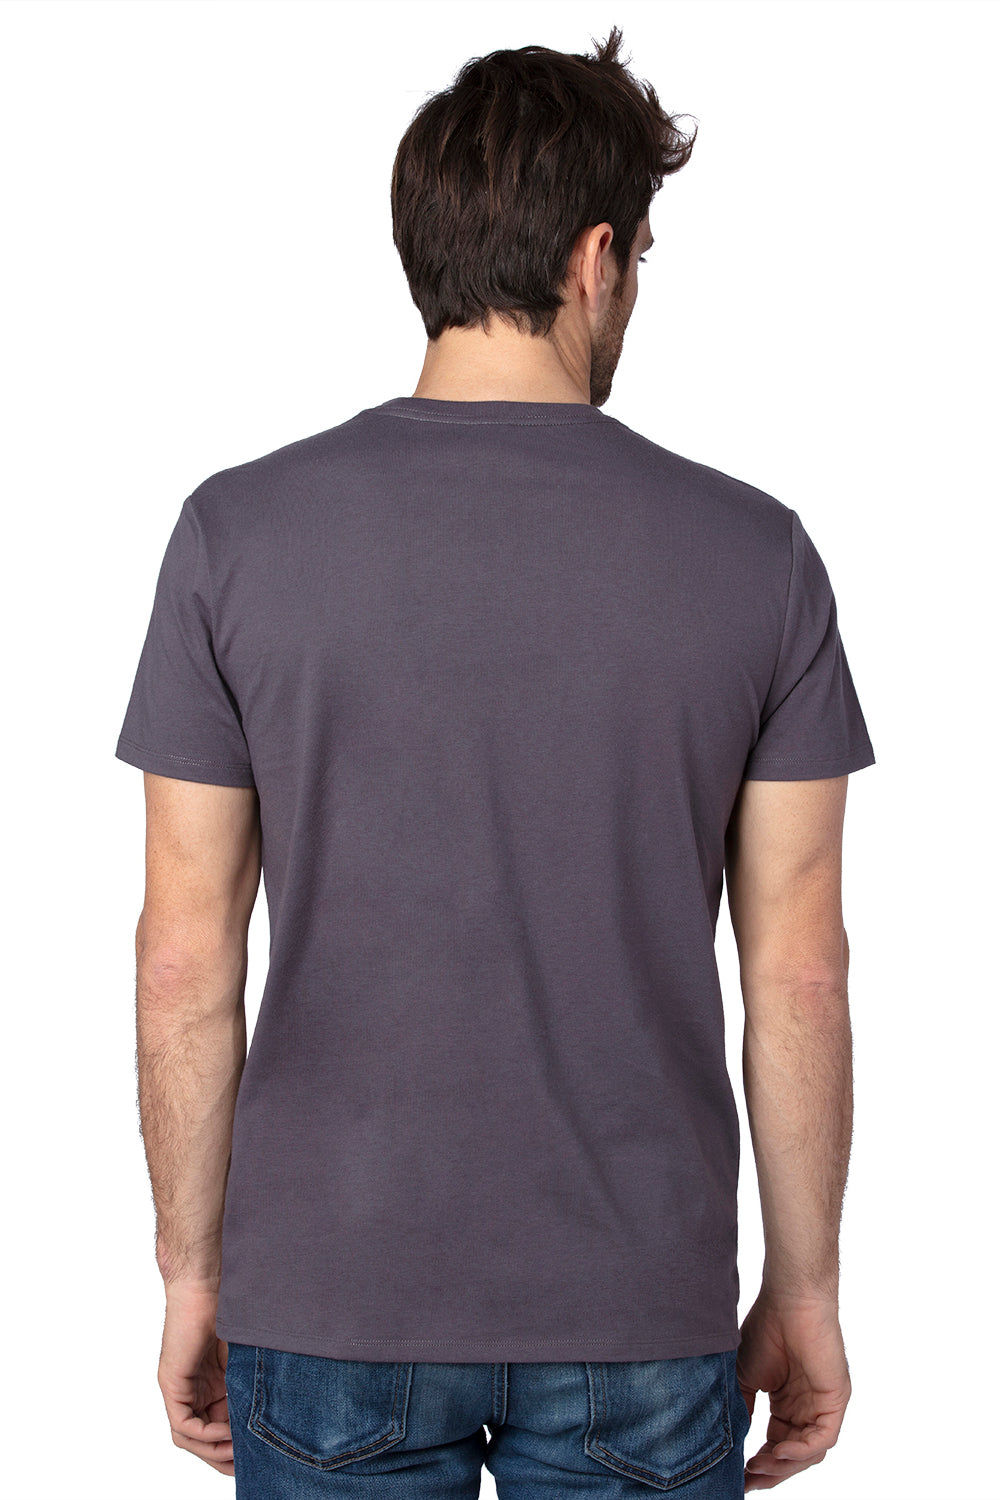 Threadfast Apparel 100A Mens Ultimate Short Sleeve Crewneck T-Shirt Graphite Grey Back